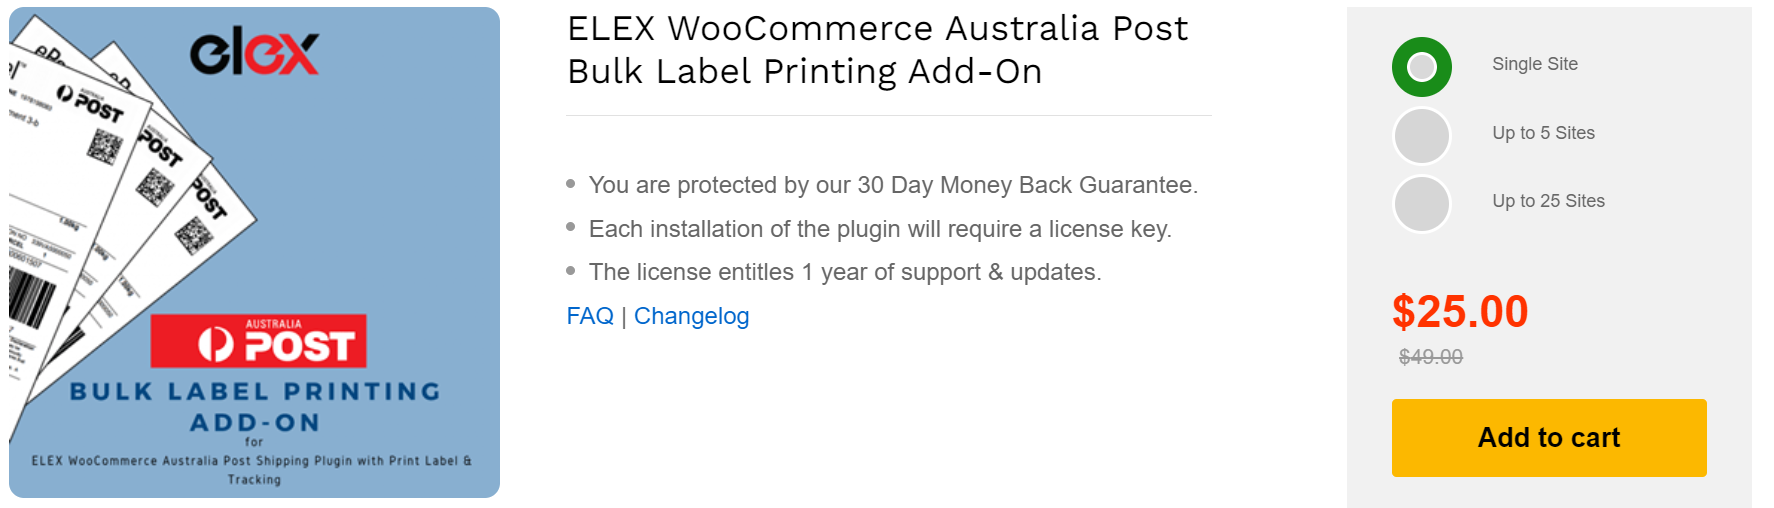 ELEX WooCommerce Australia Post Bulk Label Printing Add-On